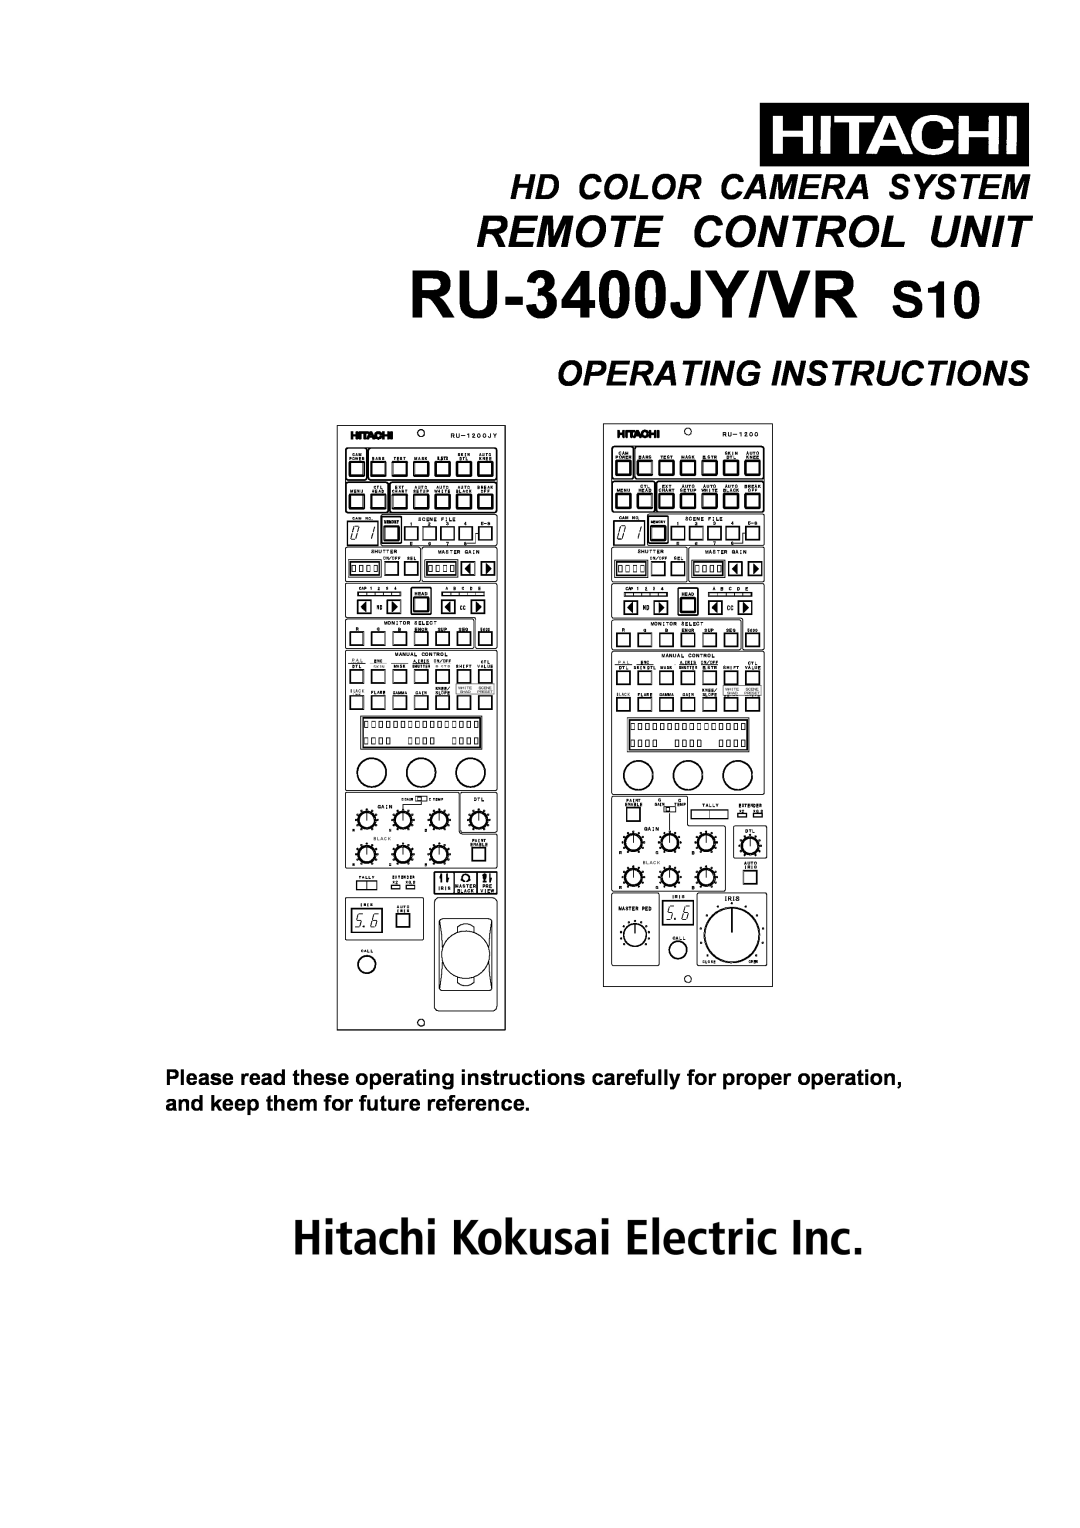 Hitachi RU-3400JY/VR S10 operating instructions Remote Control Unit, Hd Color Camera System, Operating Instructions, Ｇａｉｎ 